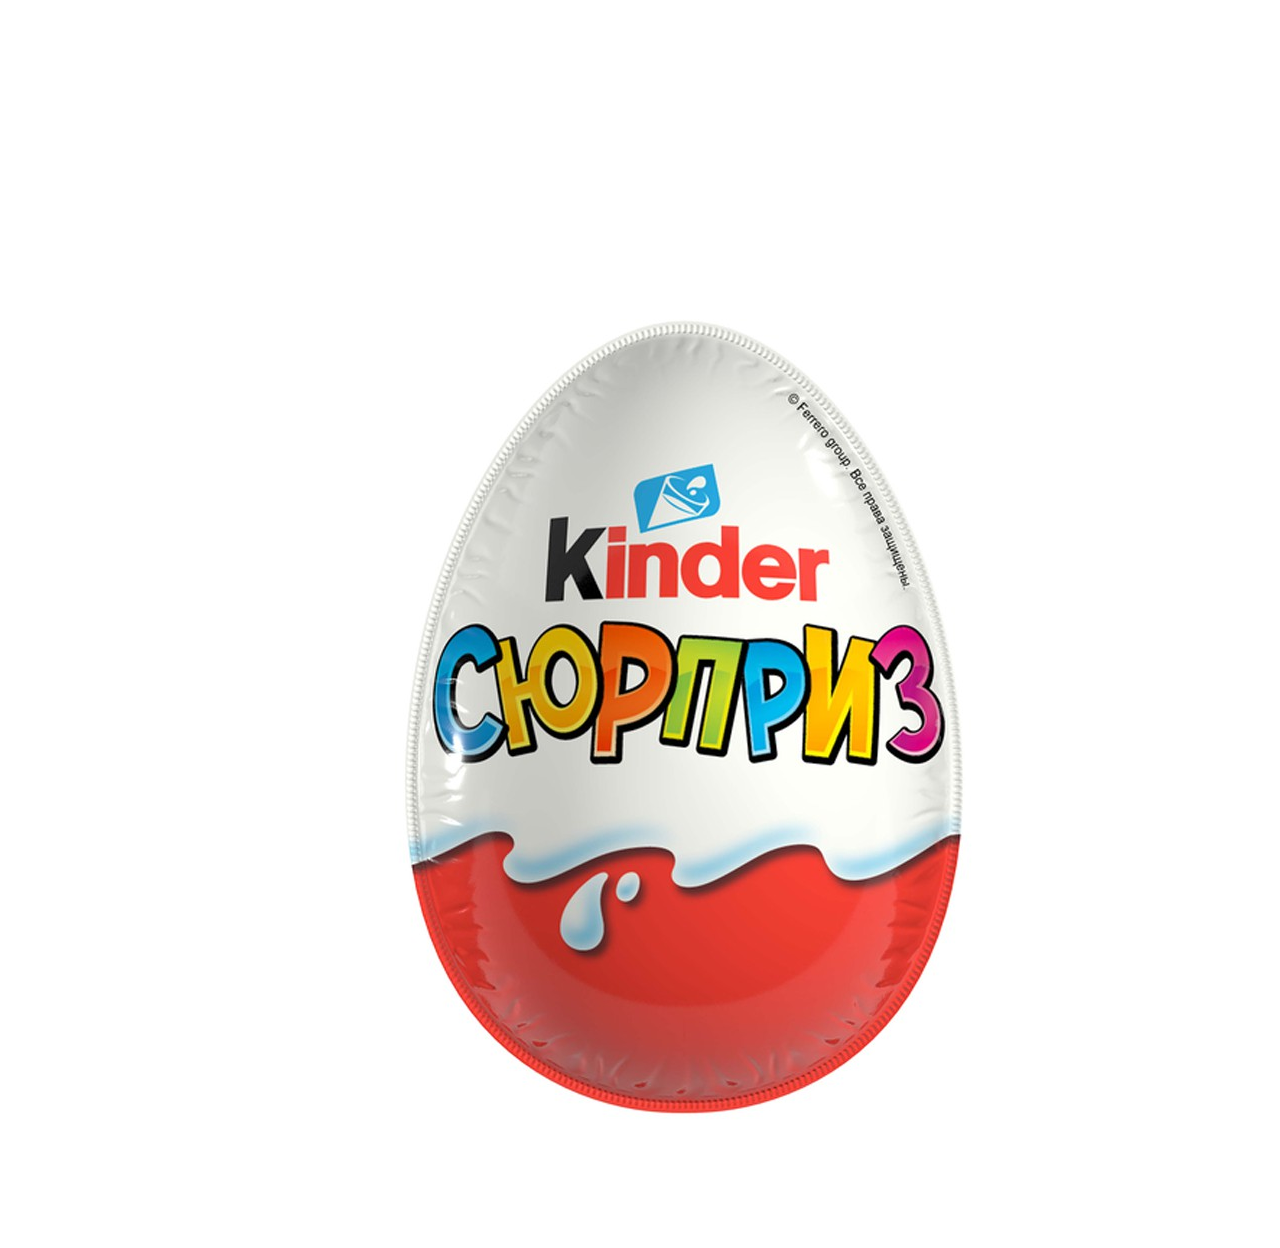 Включите kinder. Шоколадное яйцо kinder "Киндер-сюрприз", 20 г. Киндер сюрприз 20г шоколадное яйцо.